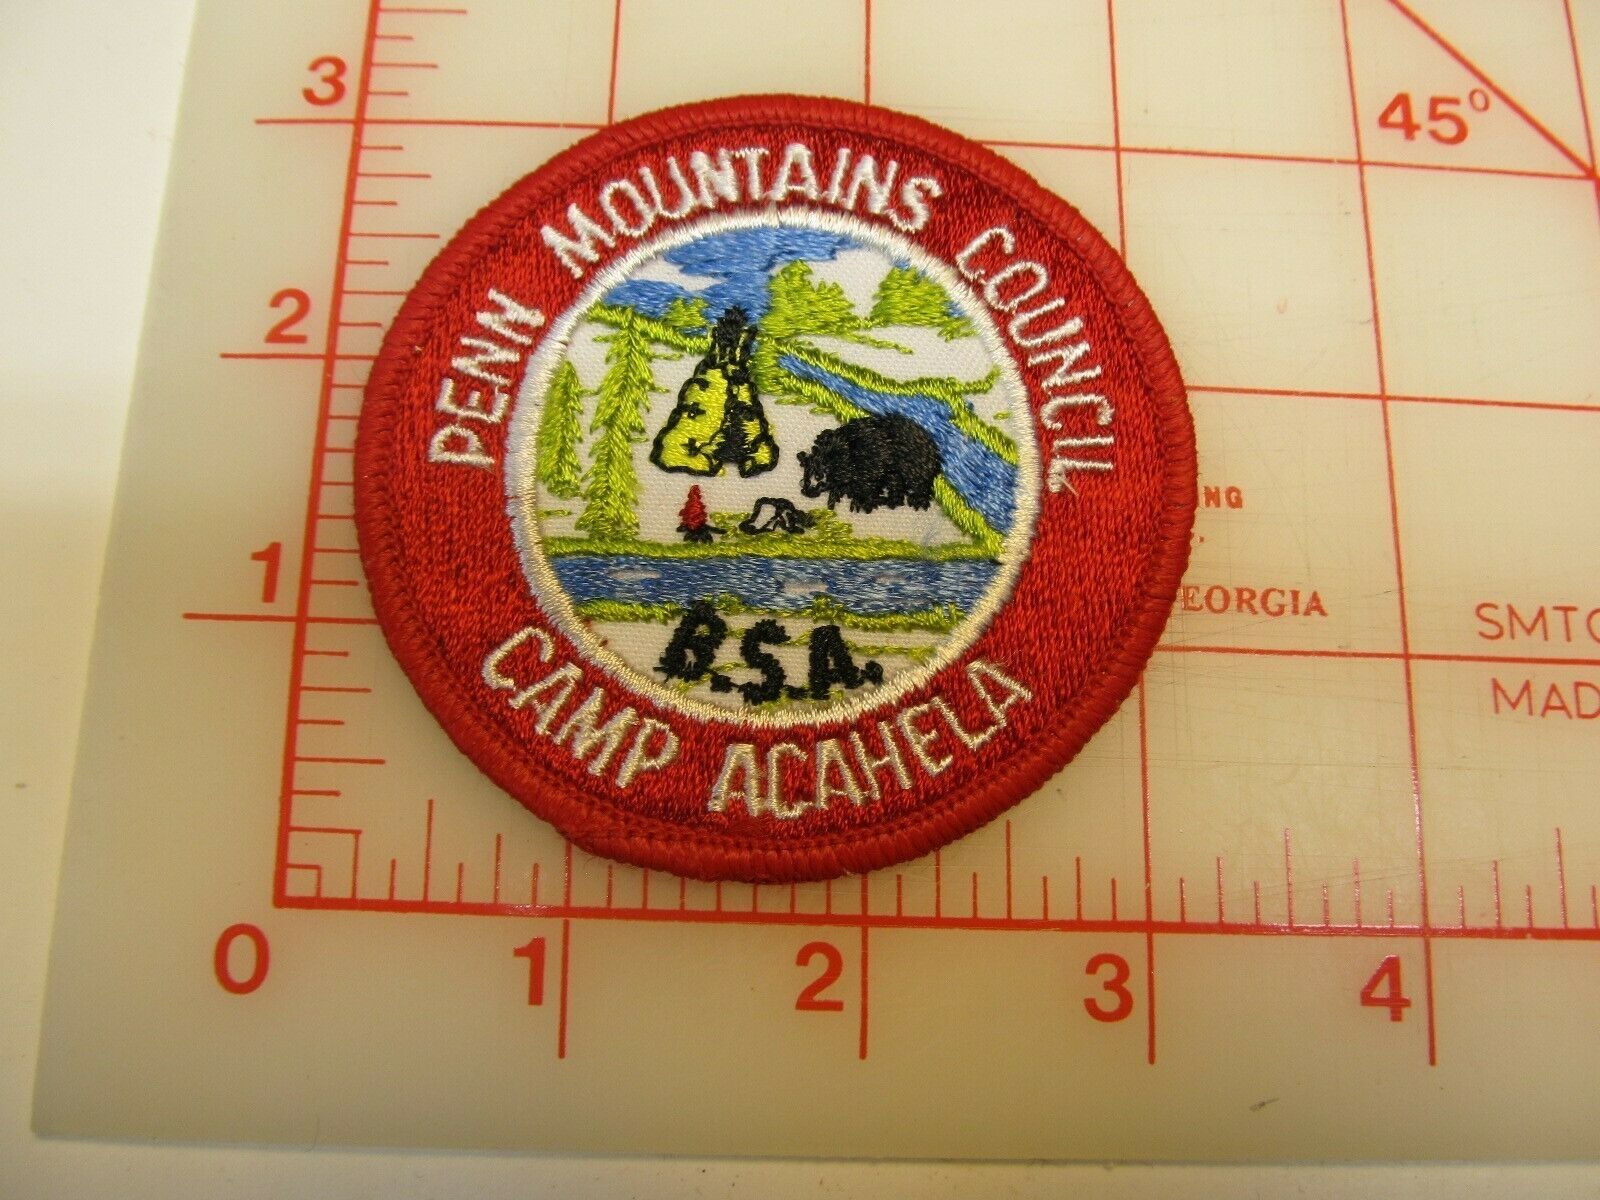 Penn Mountains Council Camp Acahela Collectible Camp Patch (r38)